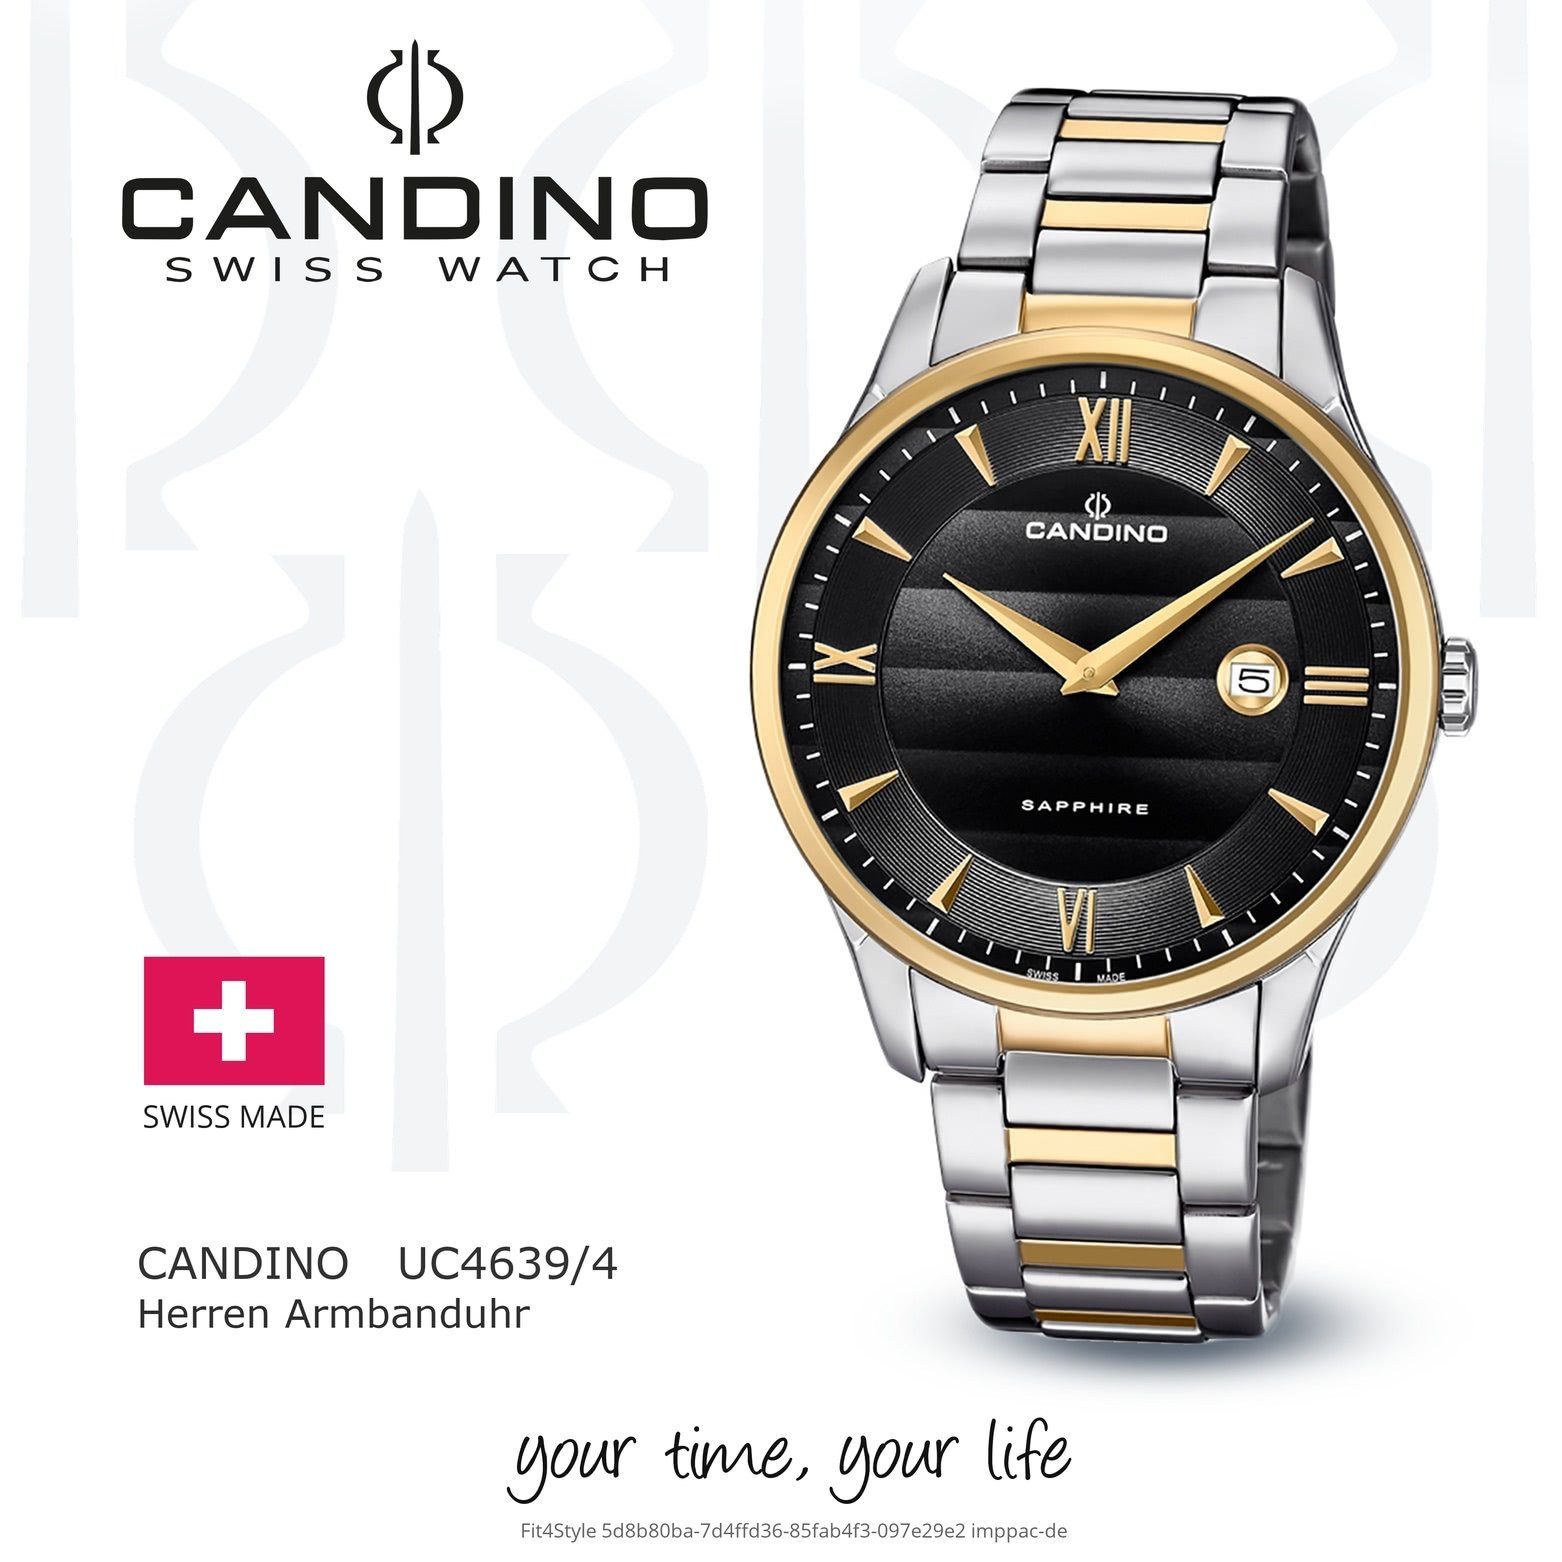 Candino Quarzuhr Candino Herren Uhr Elegant Herren silber, gold, Edelstahlarmband C4639/4, Armbanduhr rund, Analog